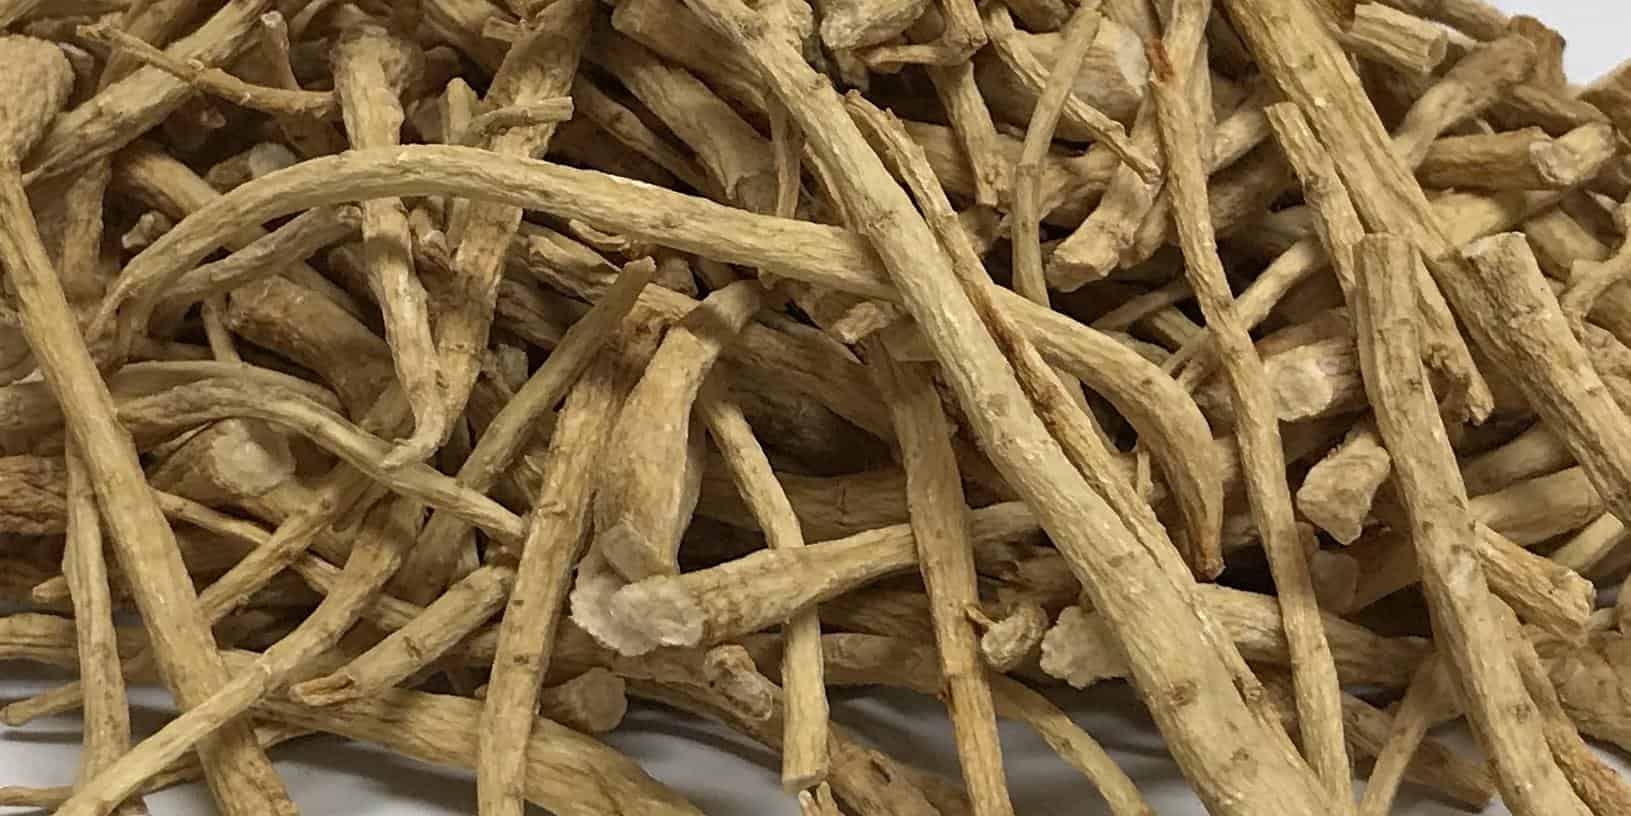 ginseng roots close up